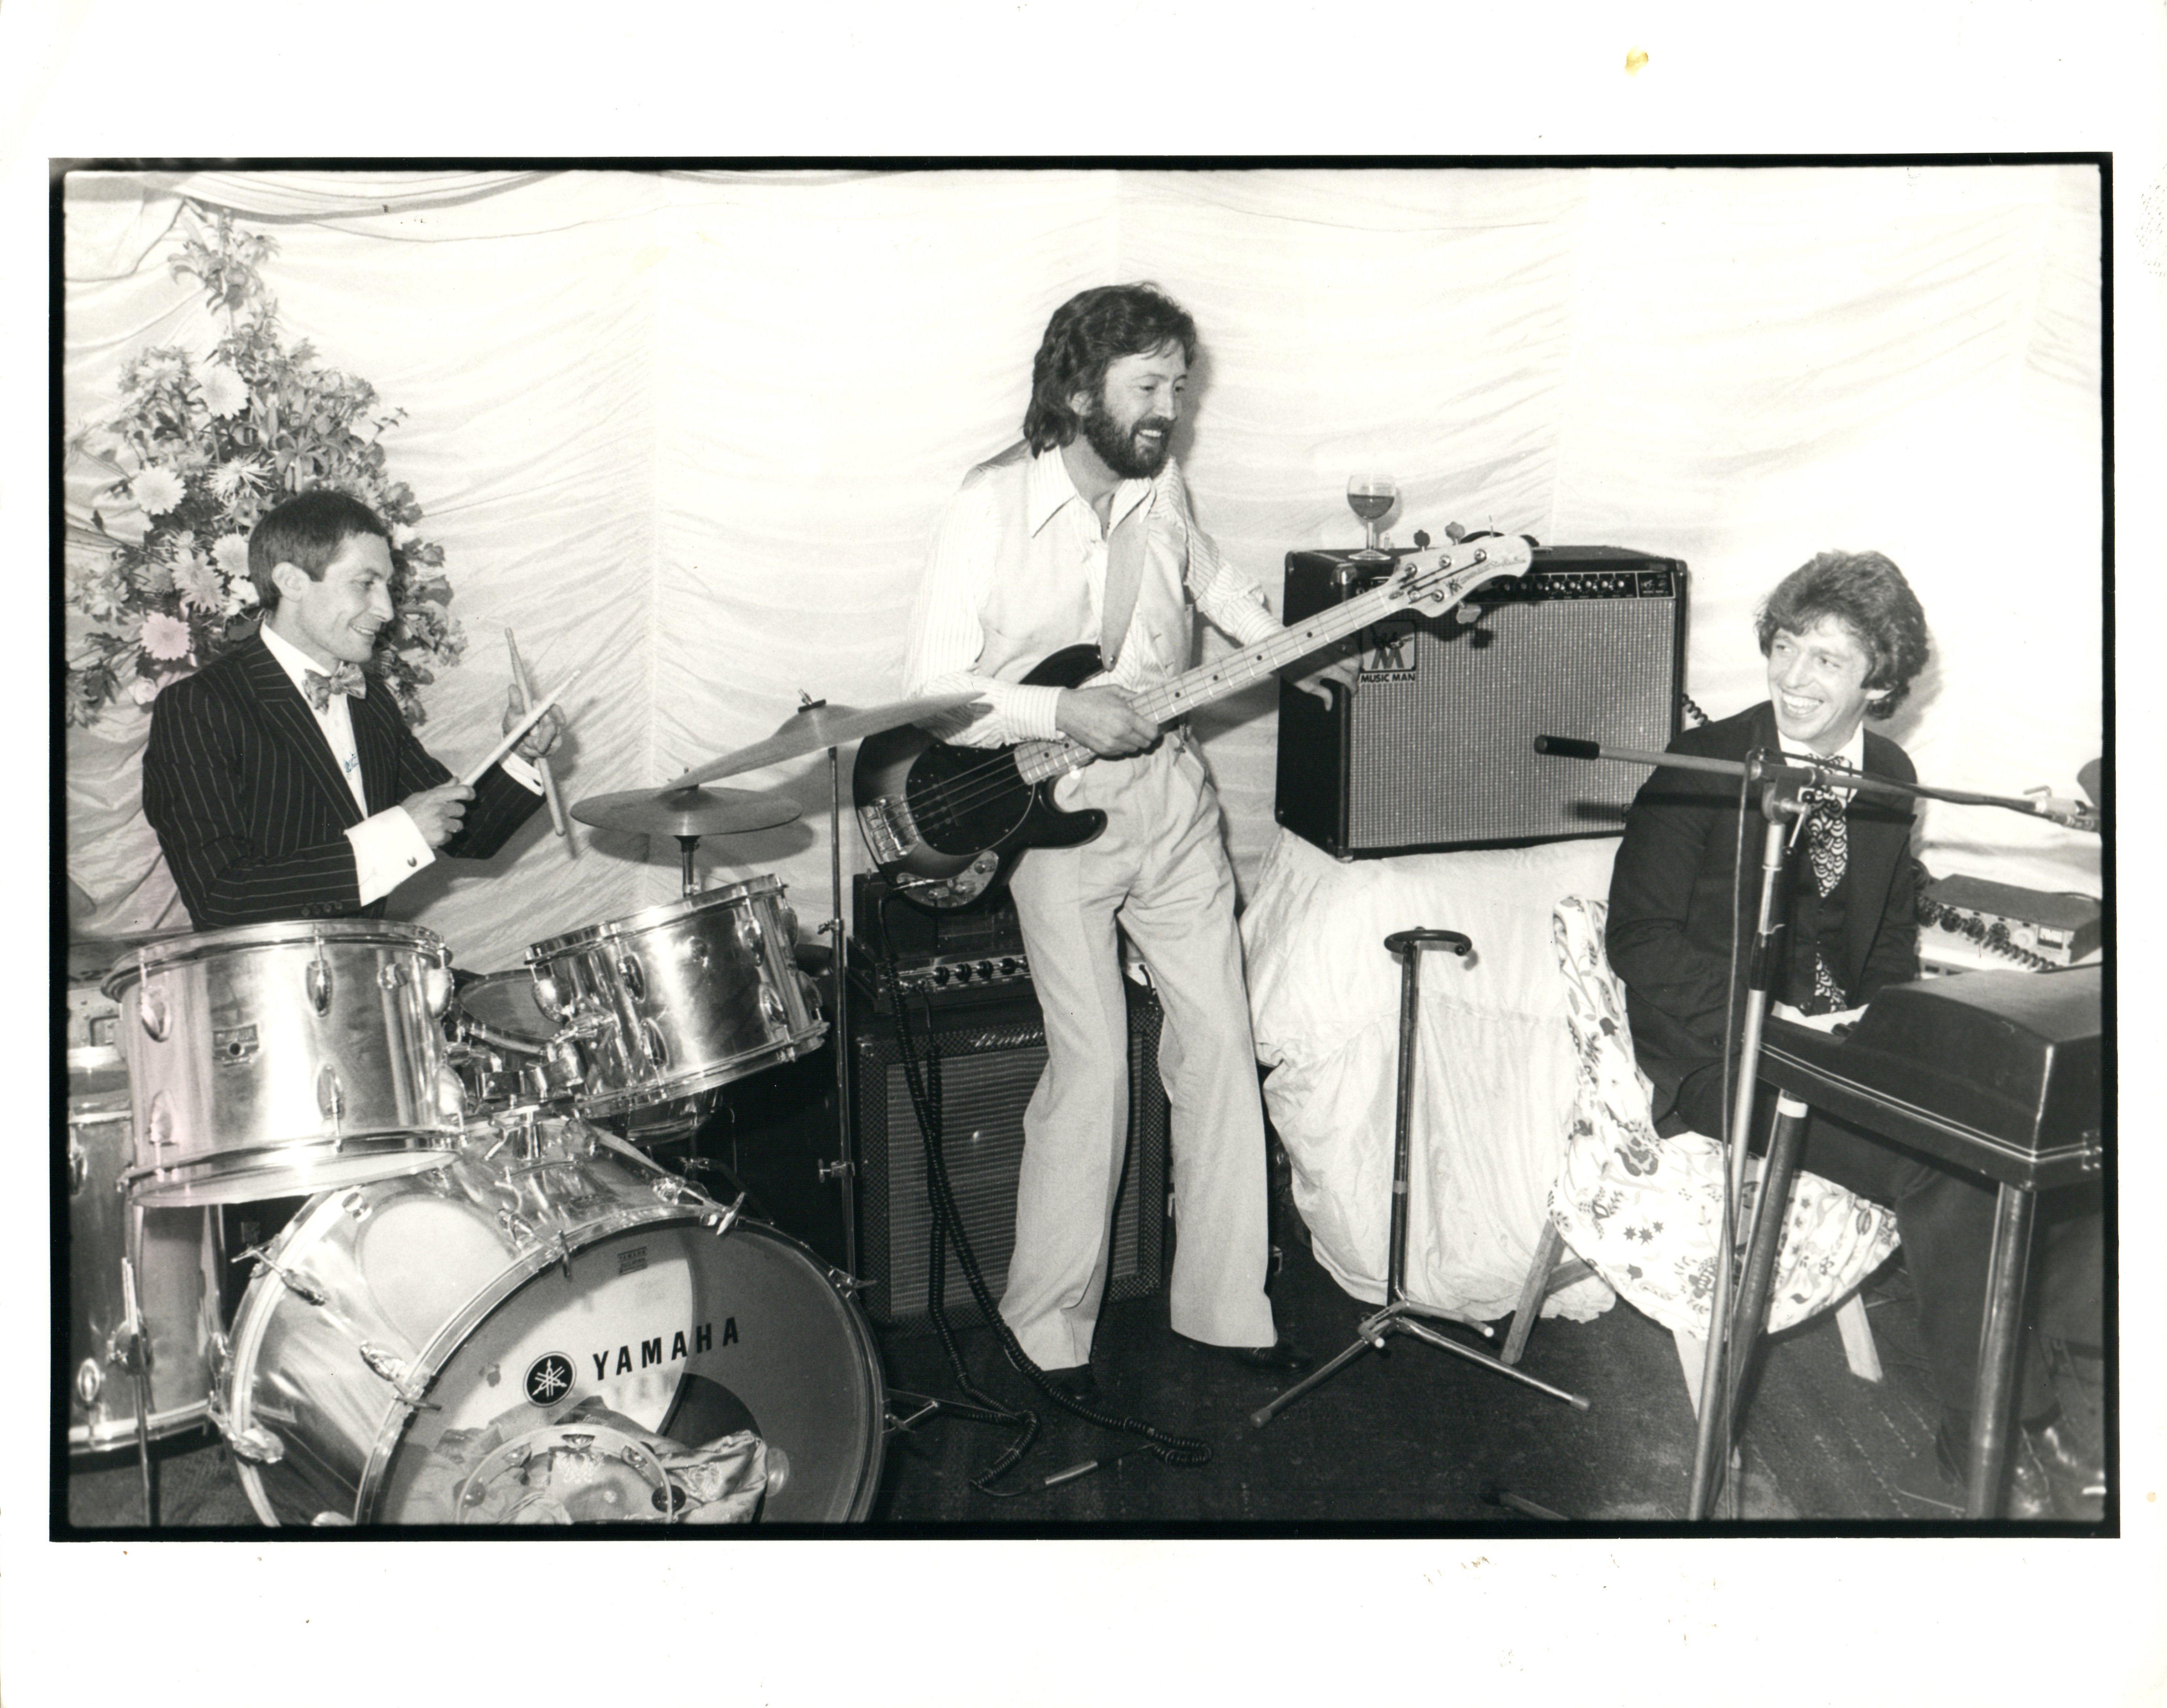 Paul Canty Portrait Photograph - Eric Clapton Playing at a Wedding Celebration Vintage Original Photograph